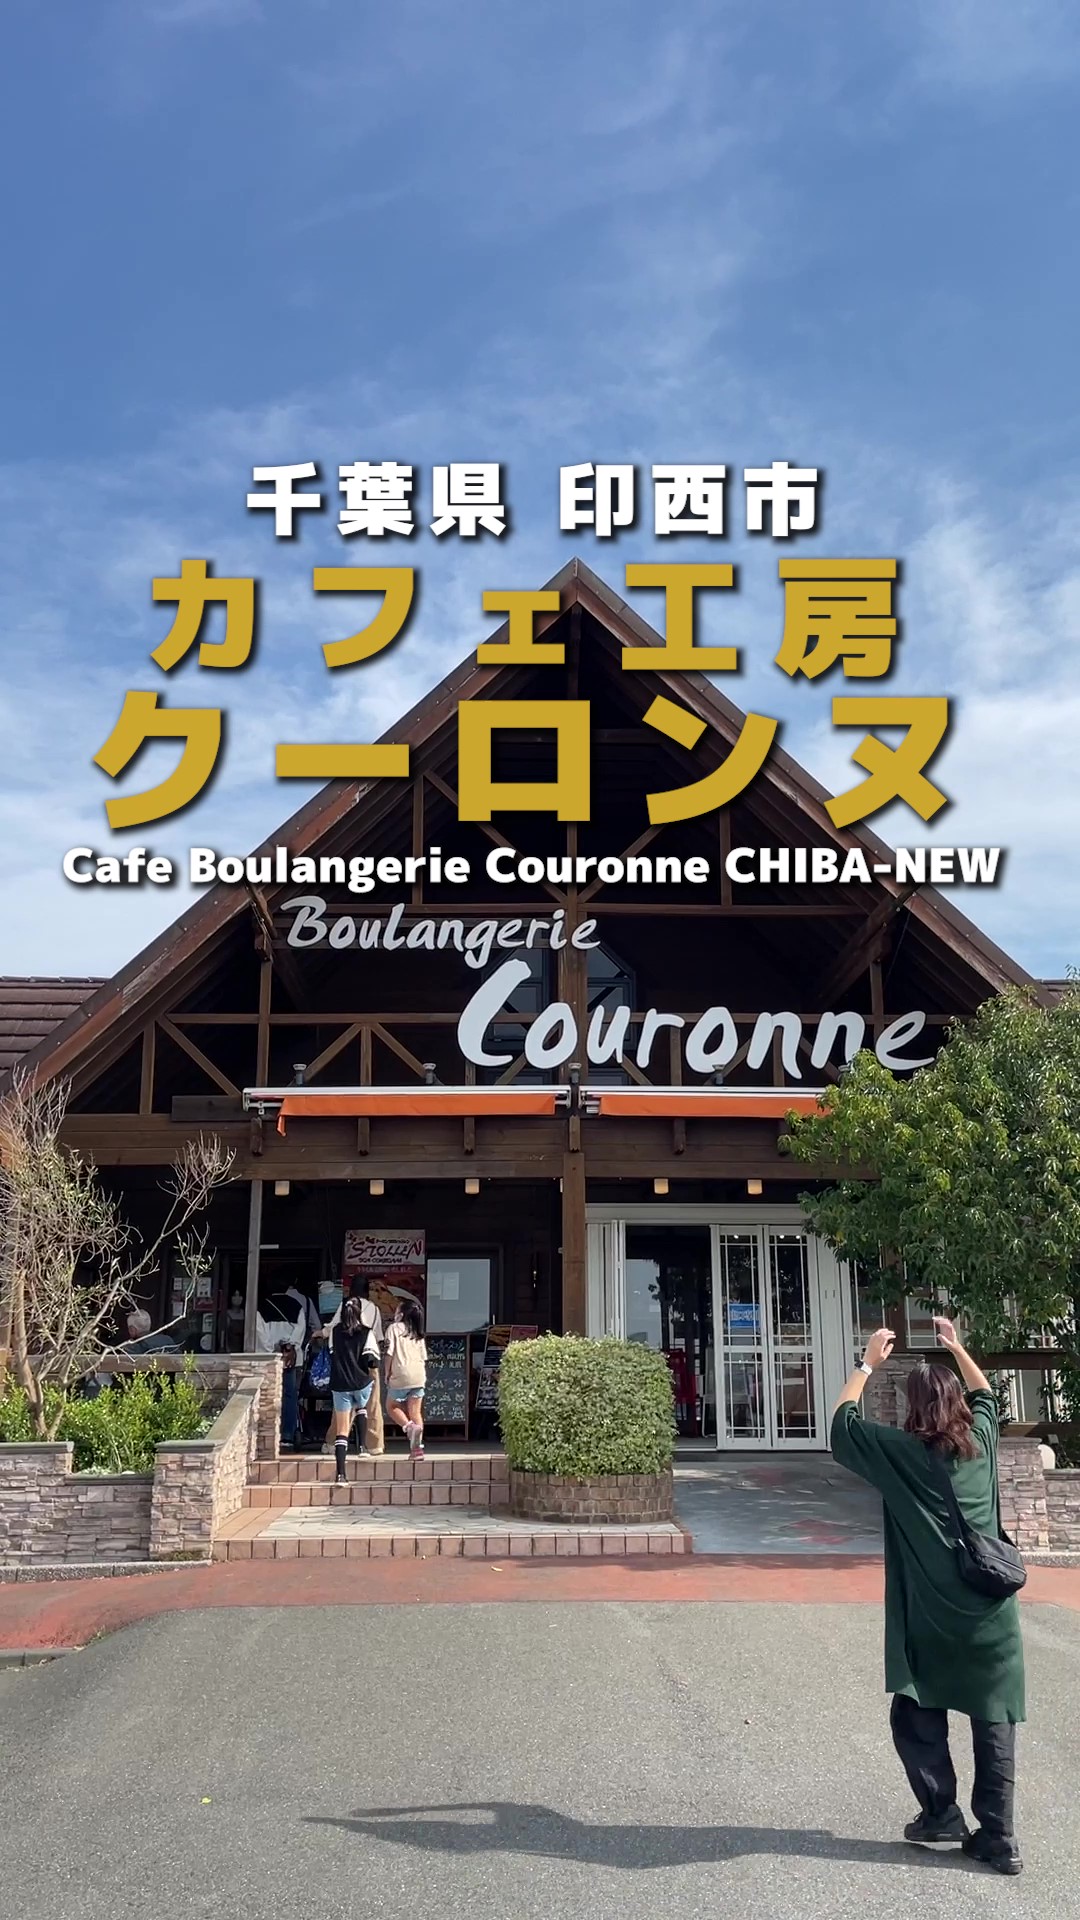 Cafe Boulangerie Couronne CHIBA-NEW カフェブーランジェリー・クーロンヌ・チバニュー